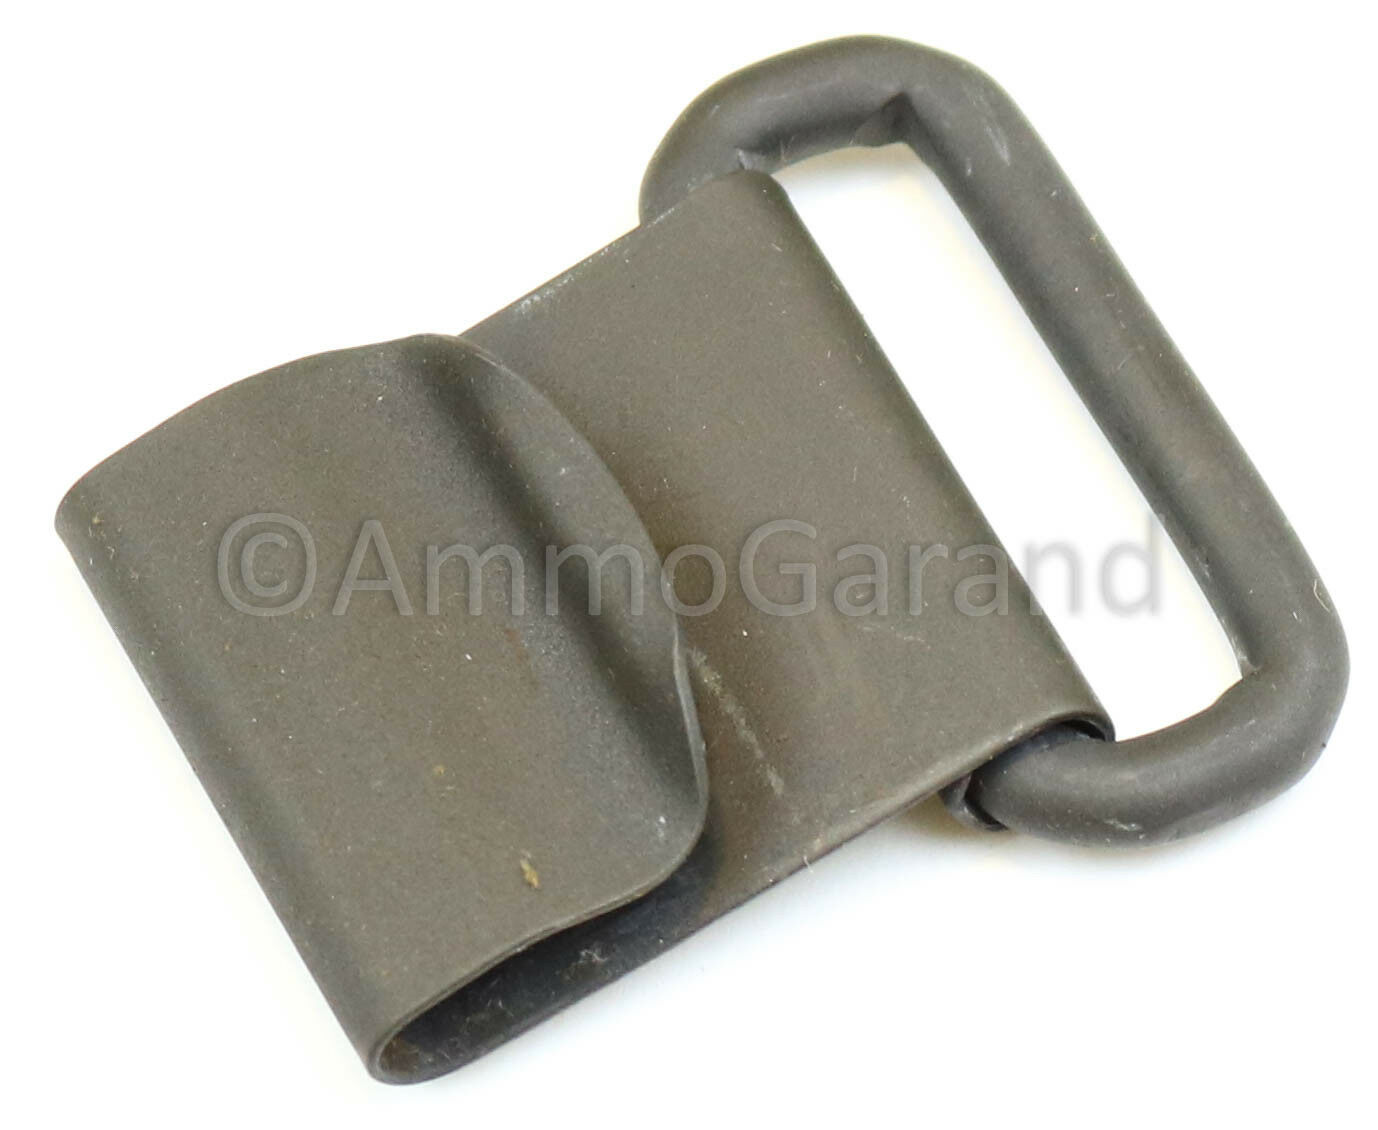 Web Sling J Hook Clip Fits M1 Garand And All 1-1/4" Usgi Slings